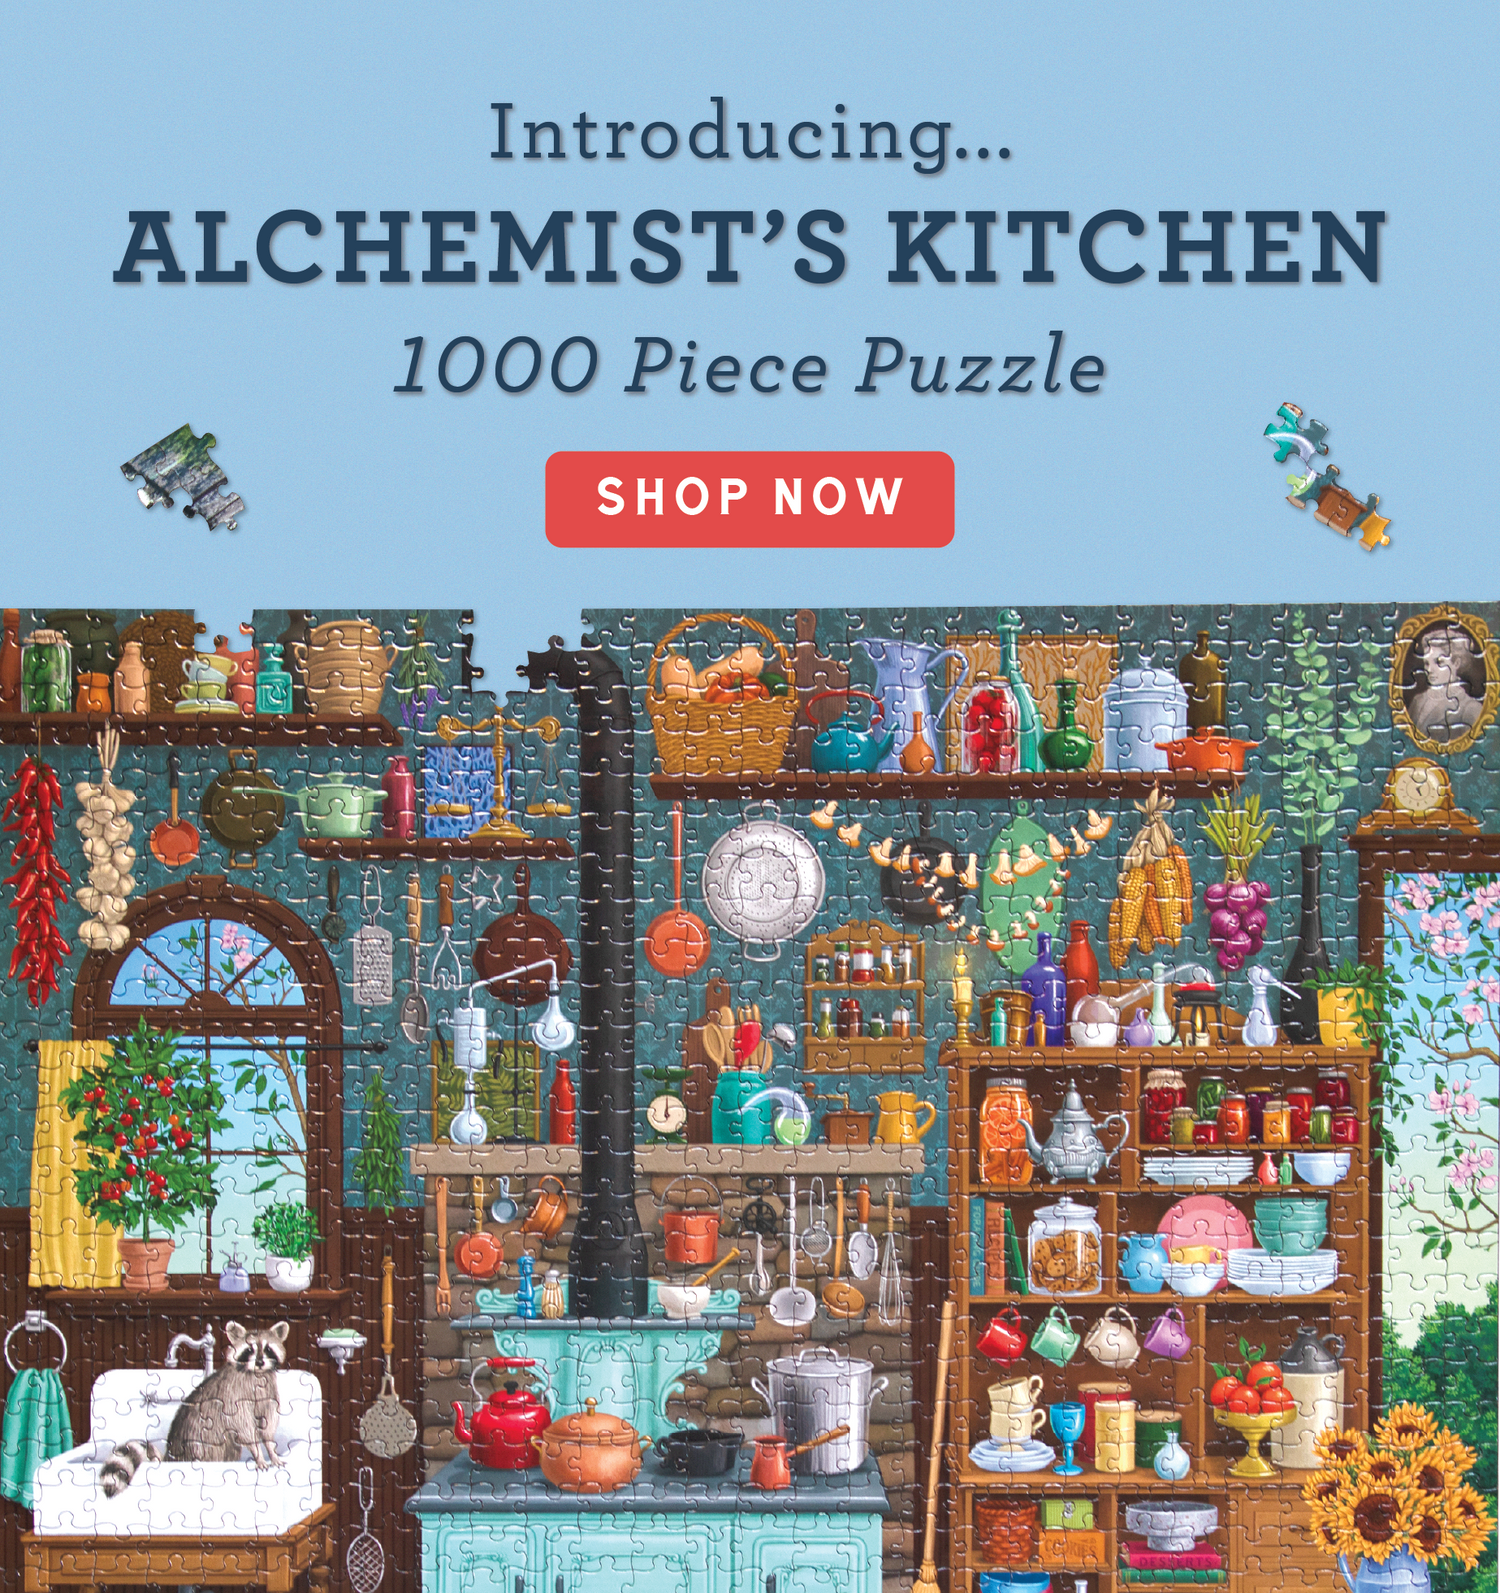 Introducing Alchemist's Kitchen 1000 piece puzzle